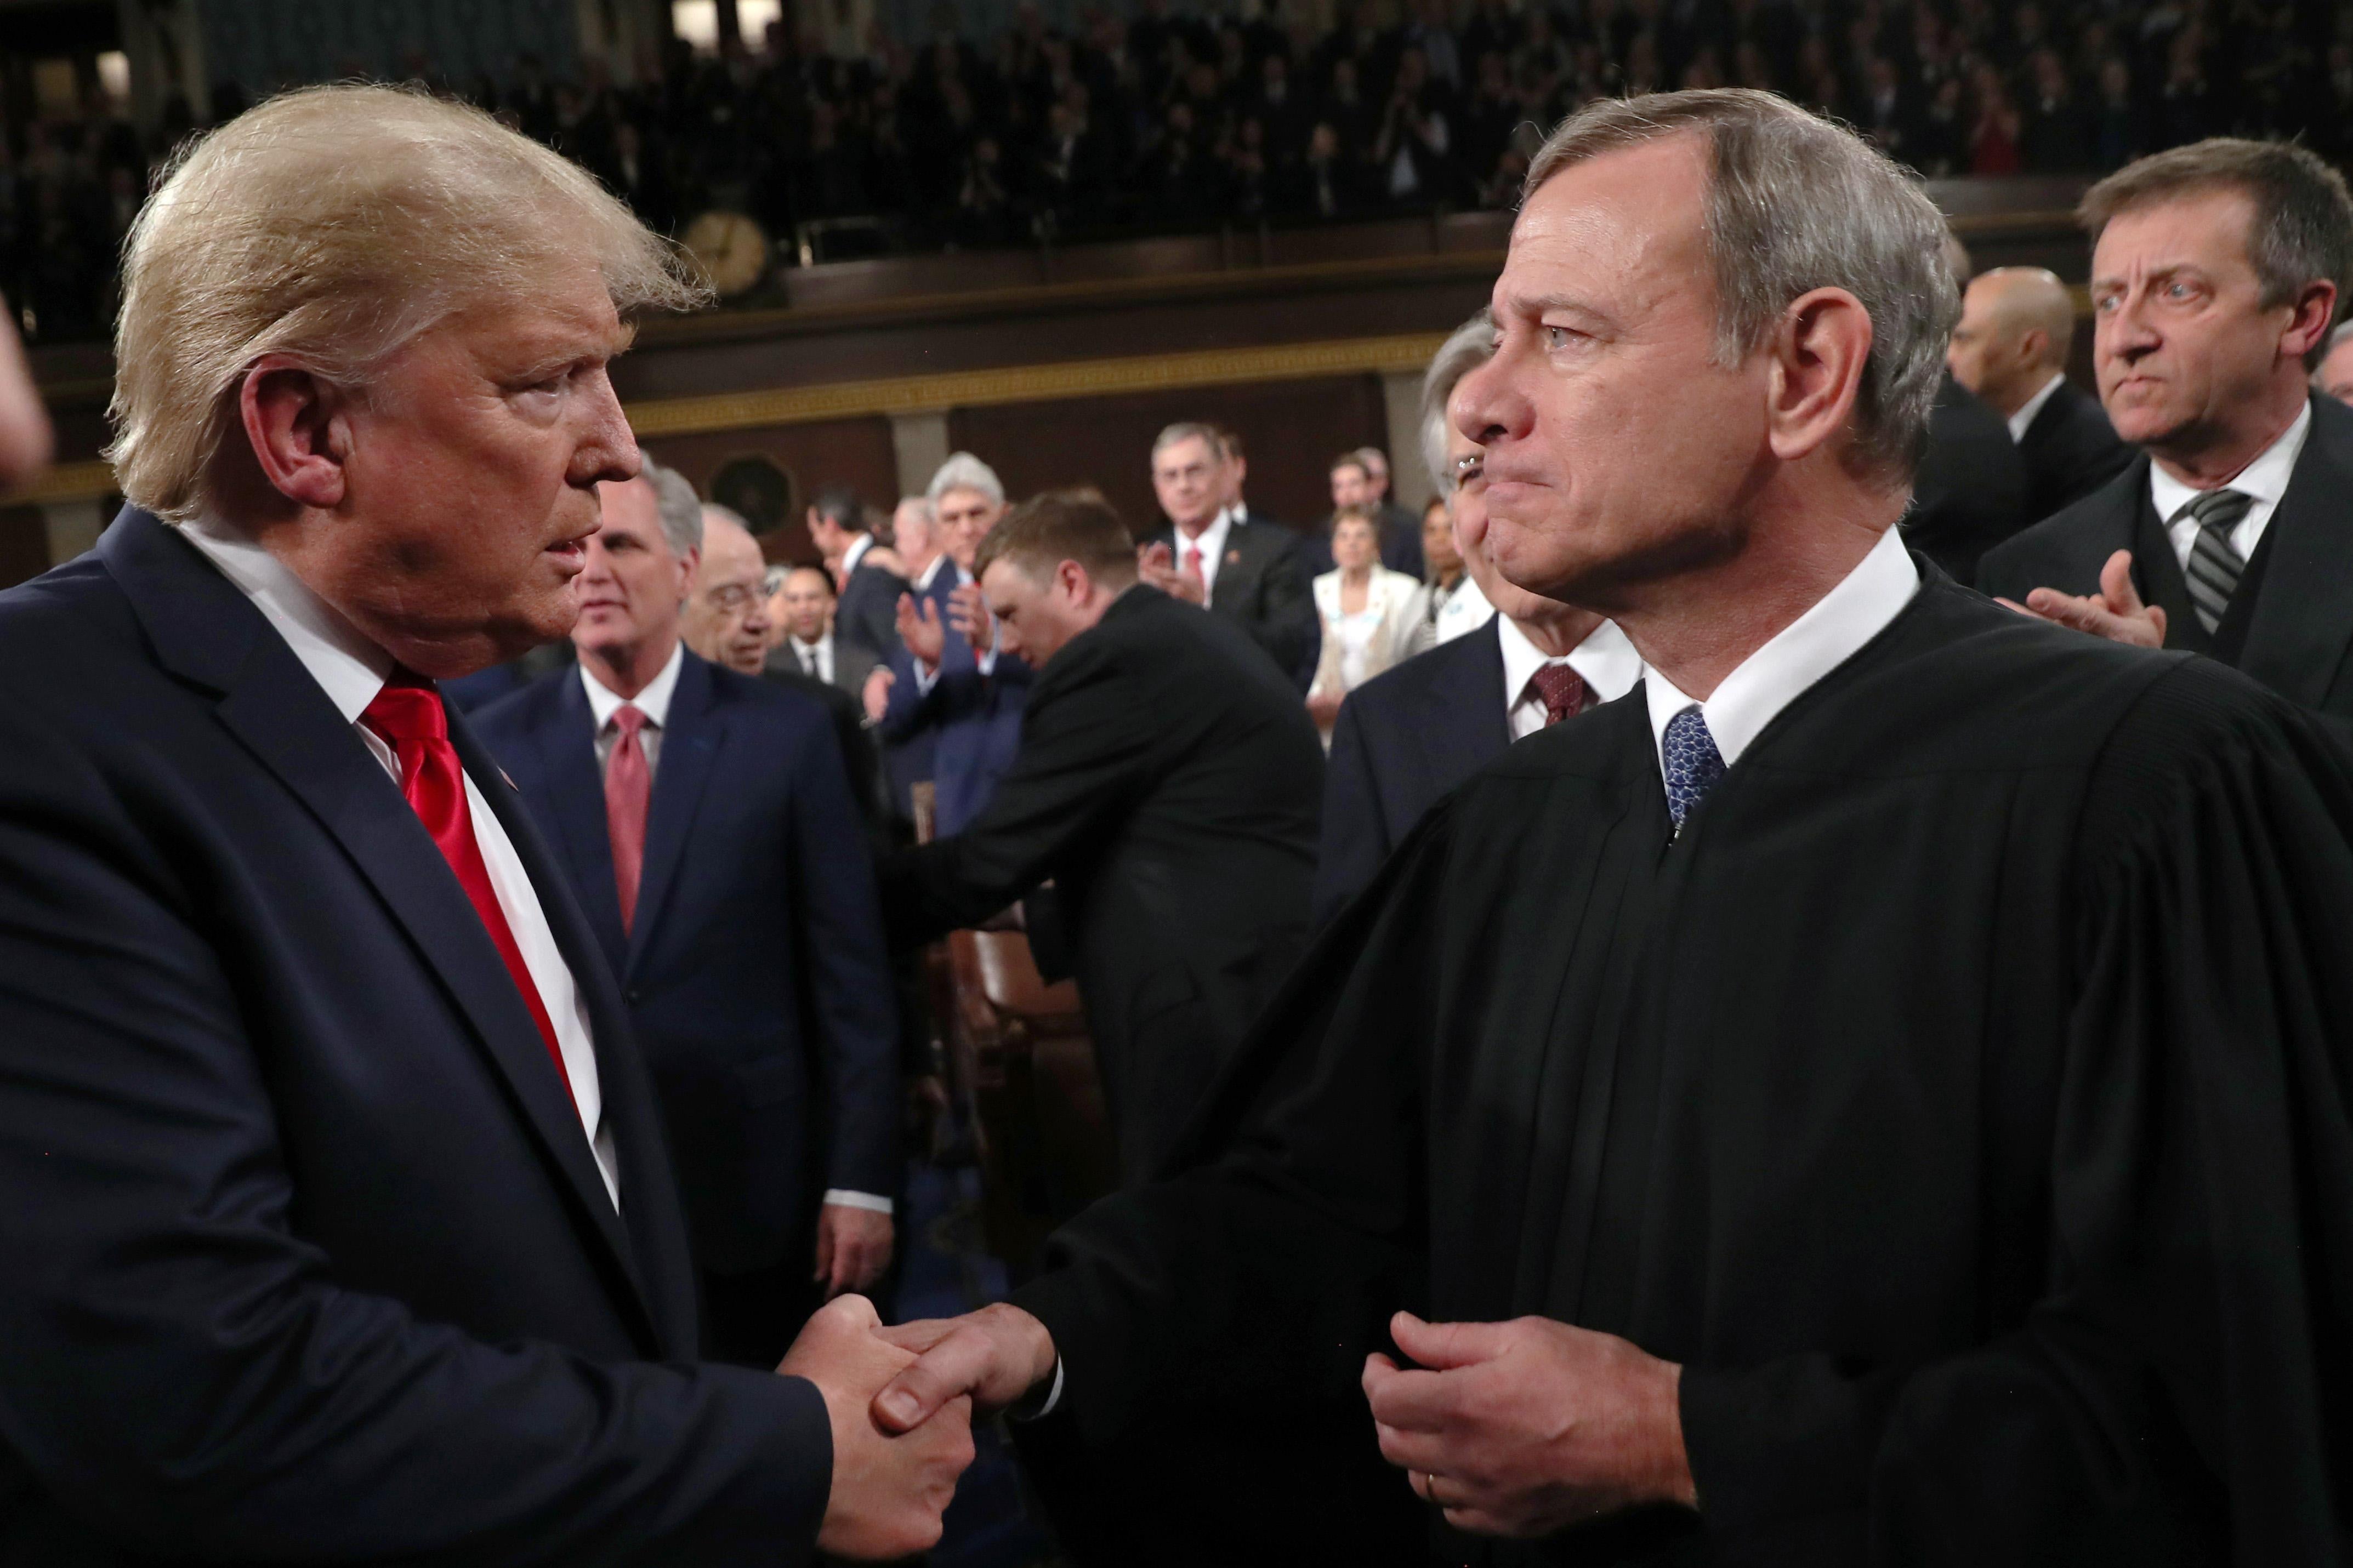 Donald Trump locks eyes with John Roberts as the two men shake hands.